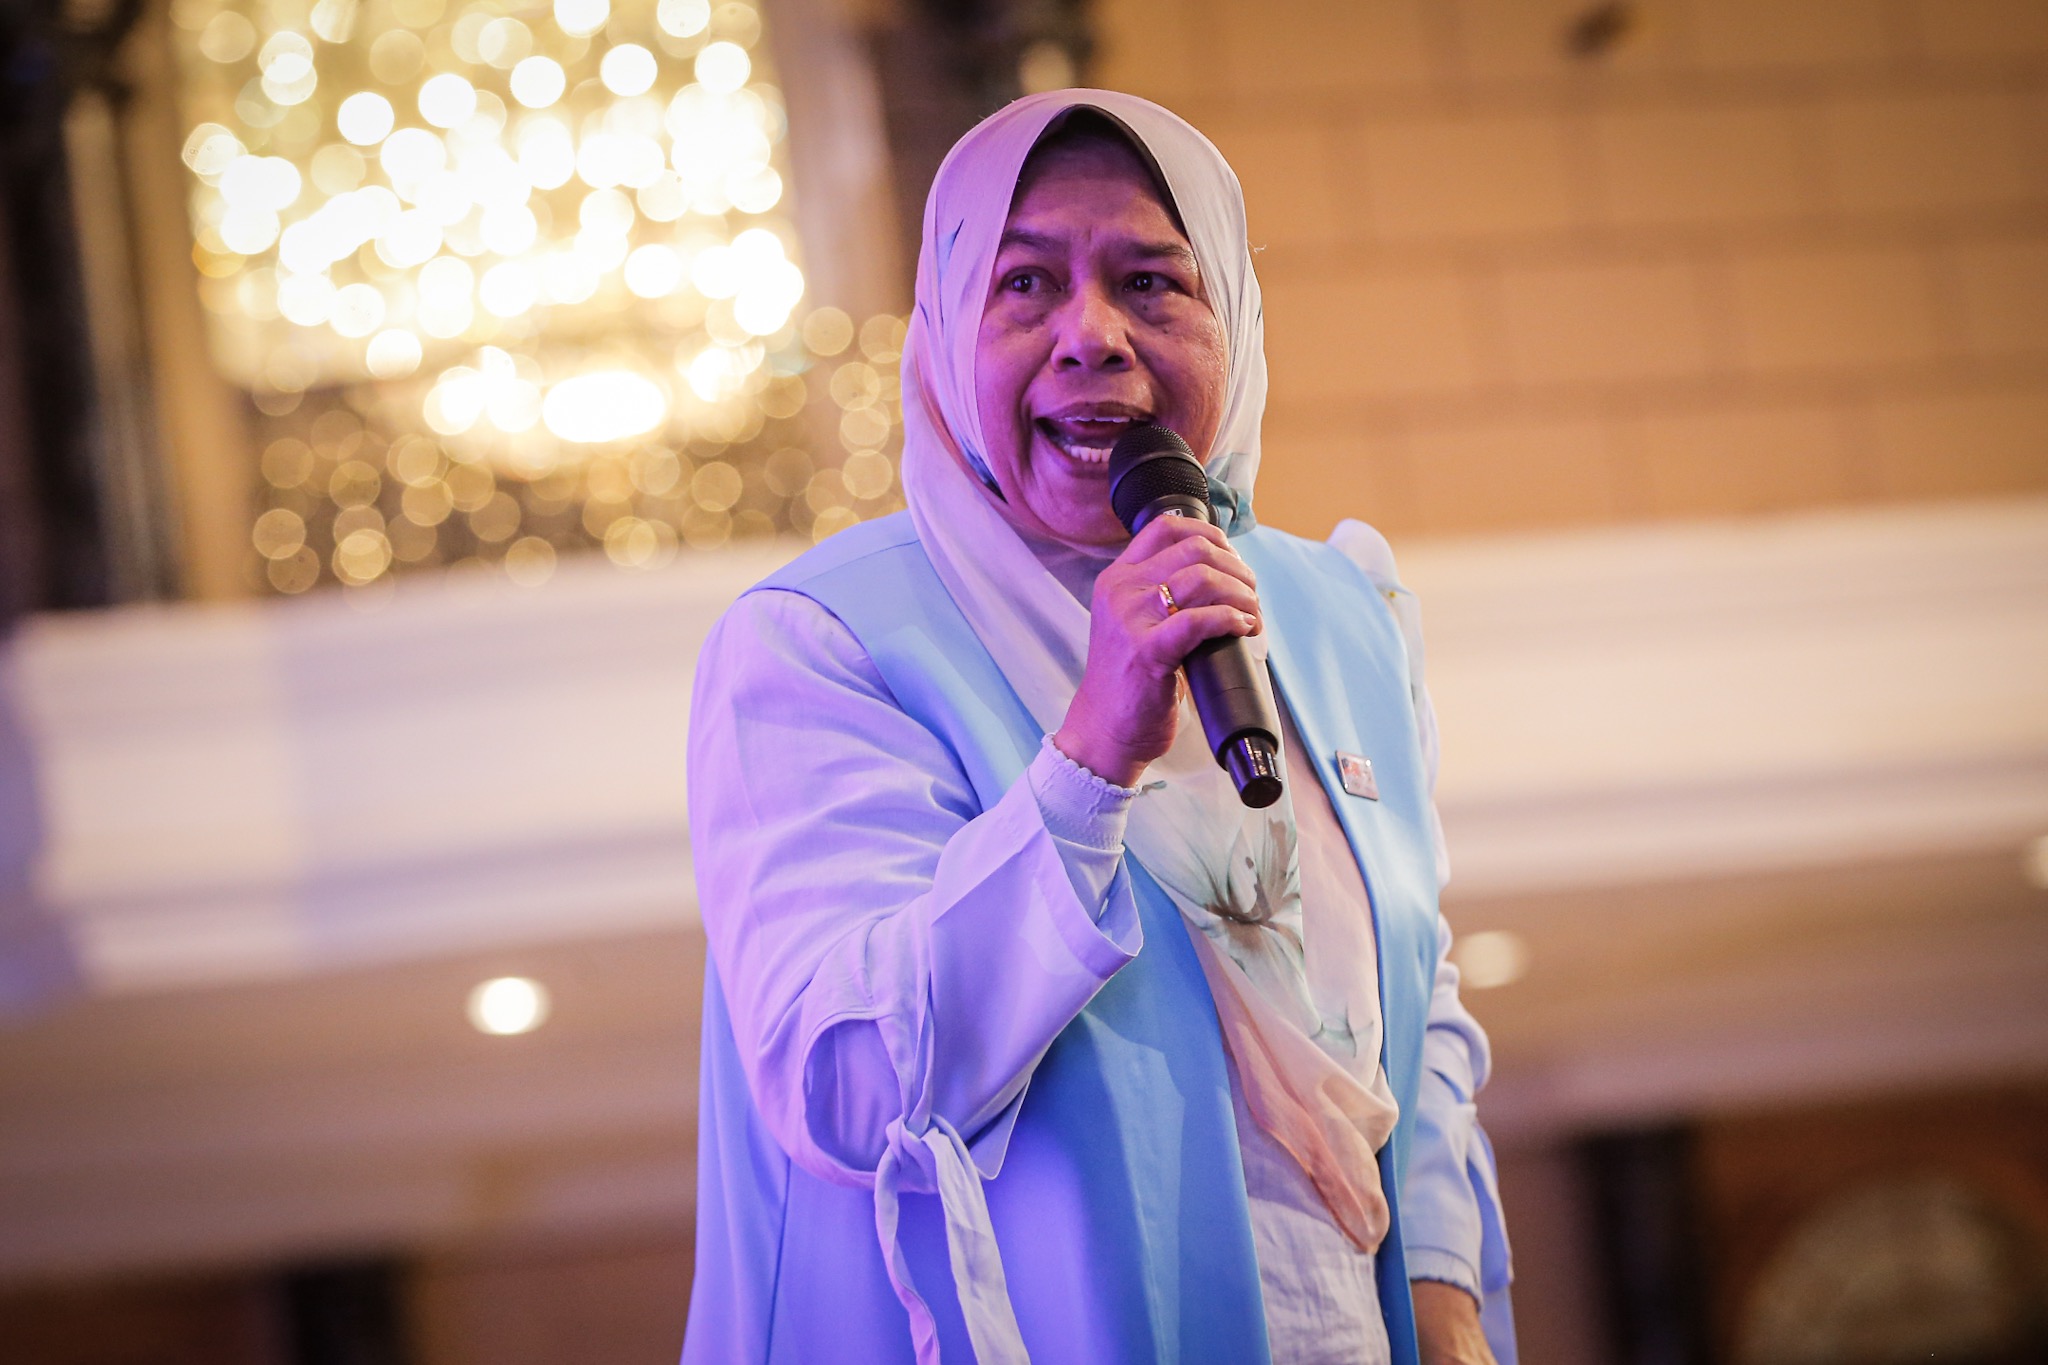 PKR vice-president Zuraida Kamaruddin speaks during the ‘SPV 2030’ dinner at Hotel Renaissance Kuala Lumpur December 8, 2019. — Picture by Hari Anggara